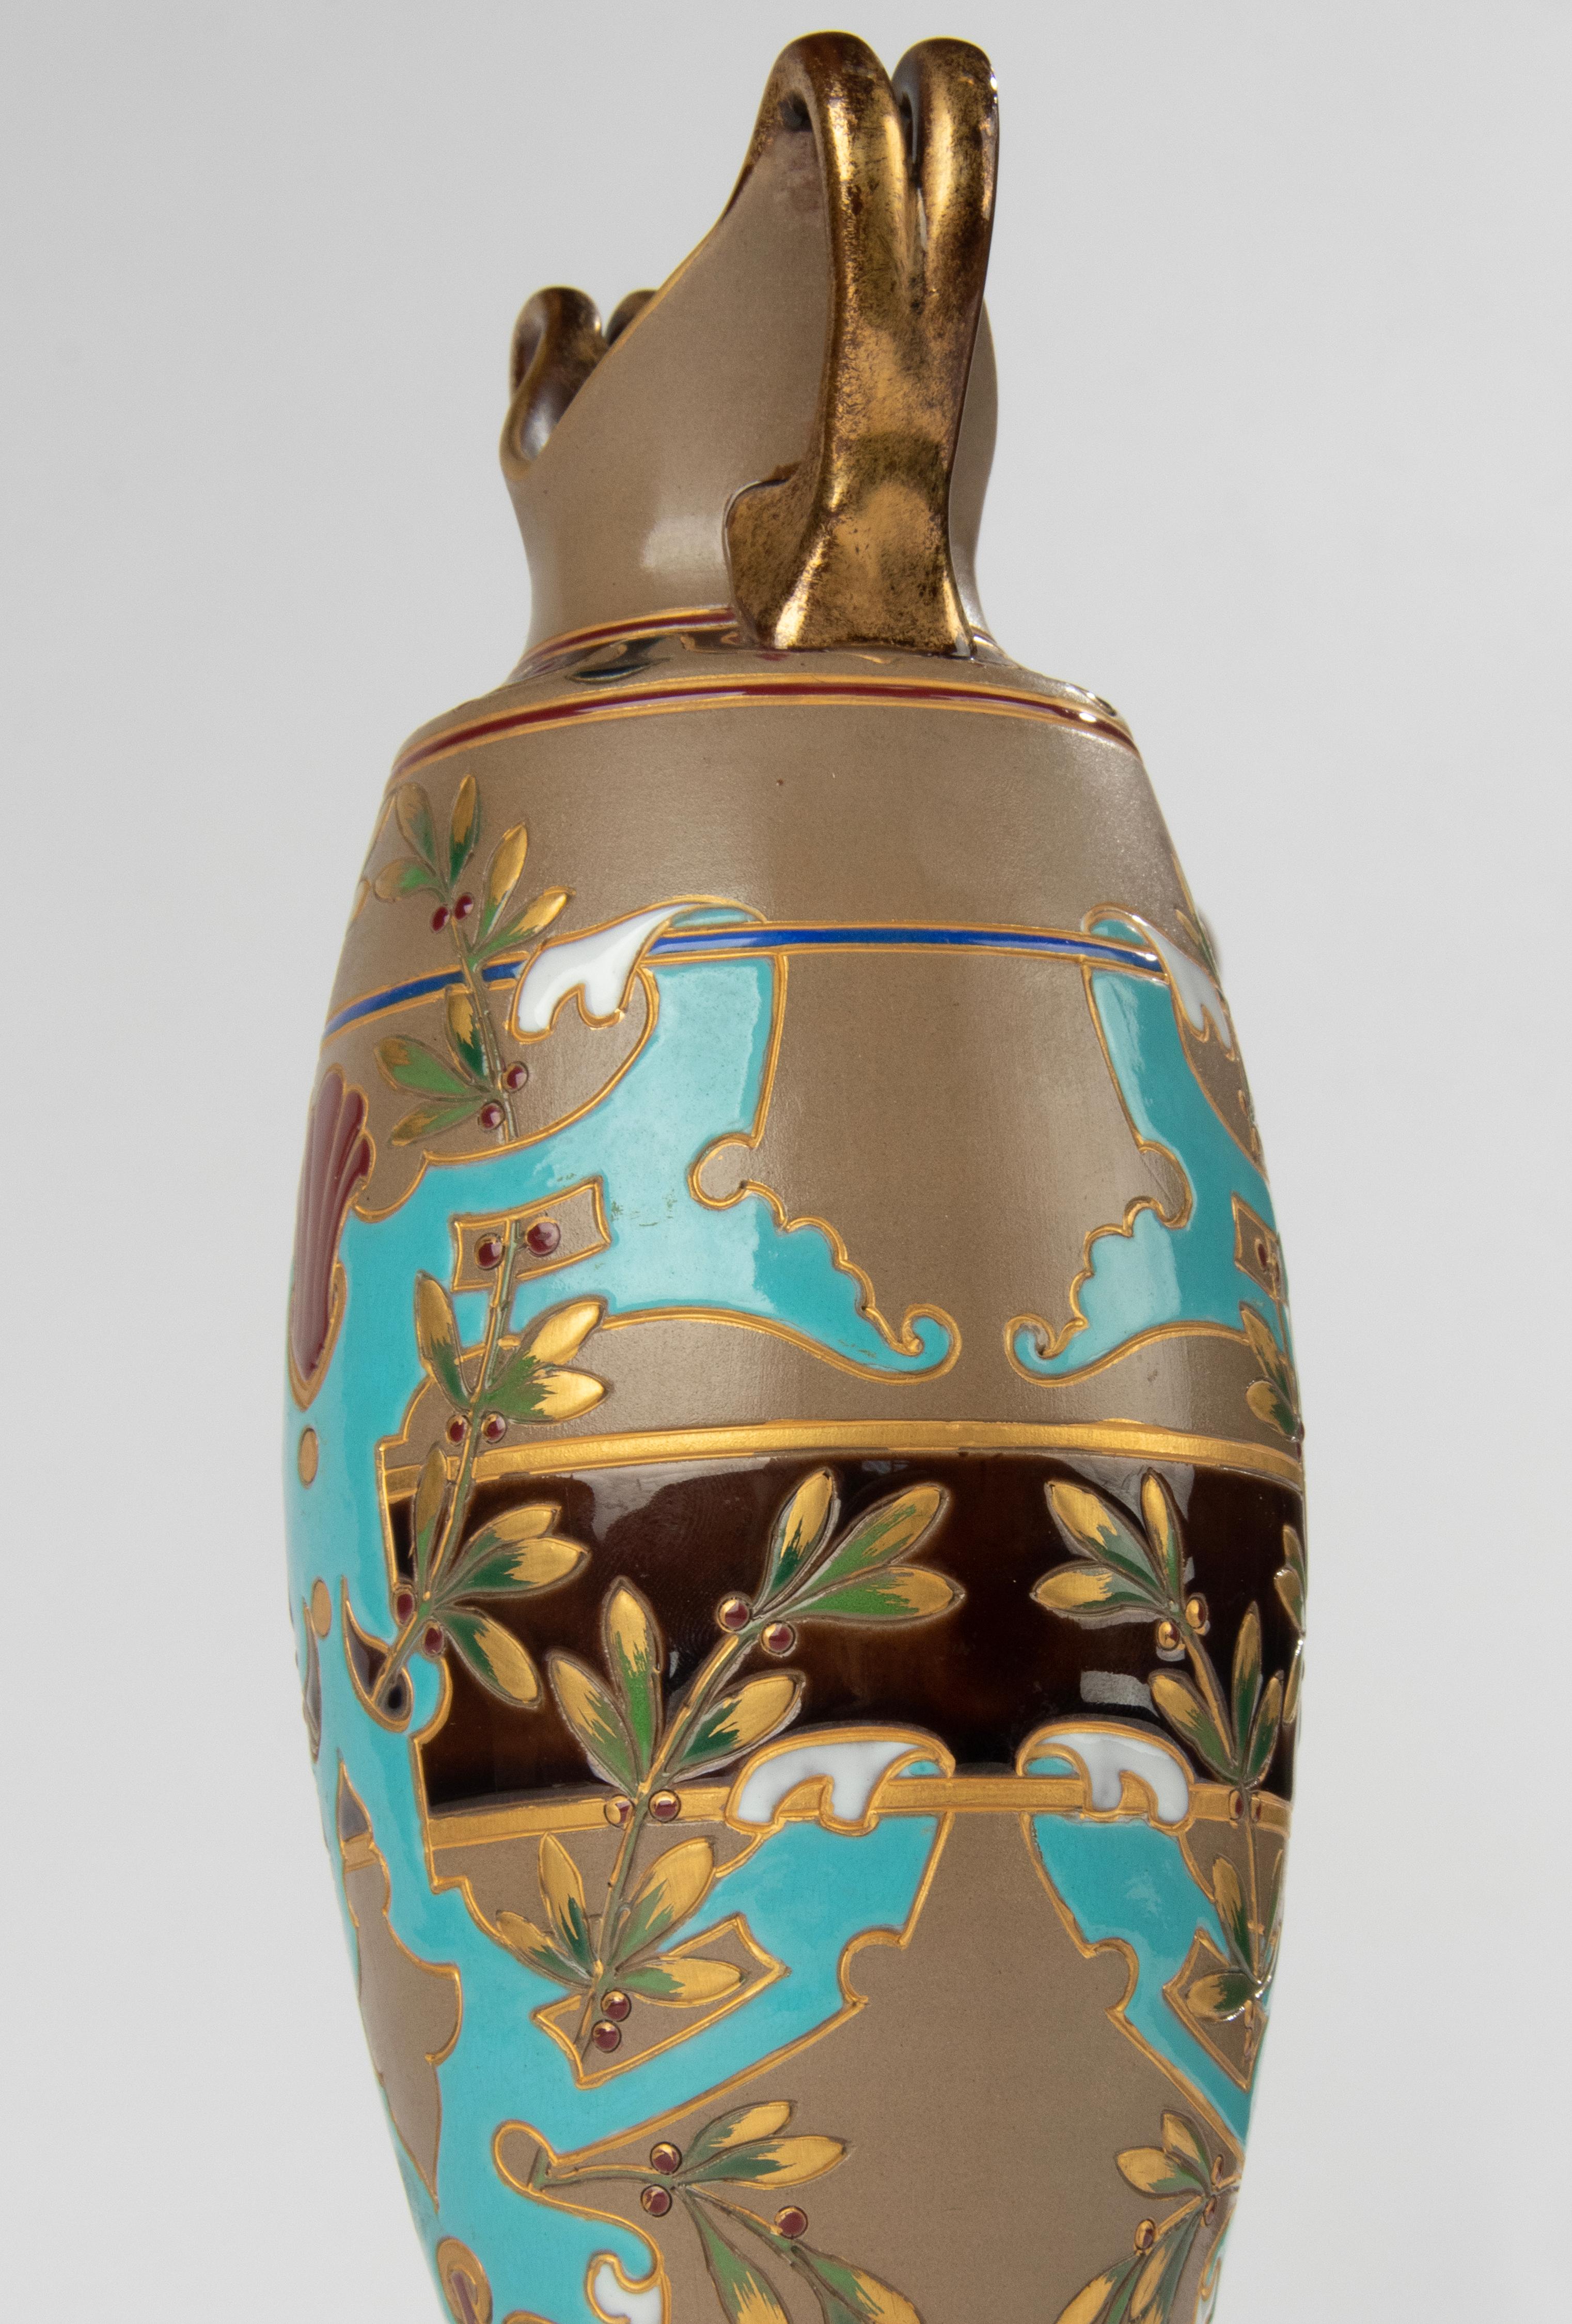 Pair of Antique Majolica Ceramic Vases with Bronze Mounts by Sarreguemines For Sale 12